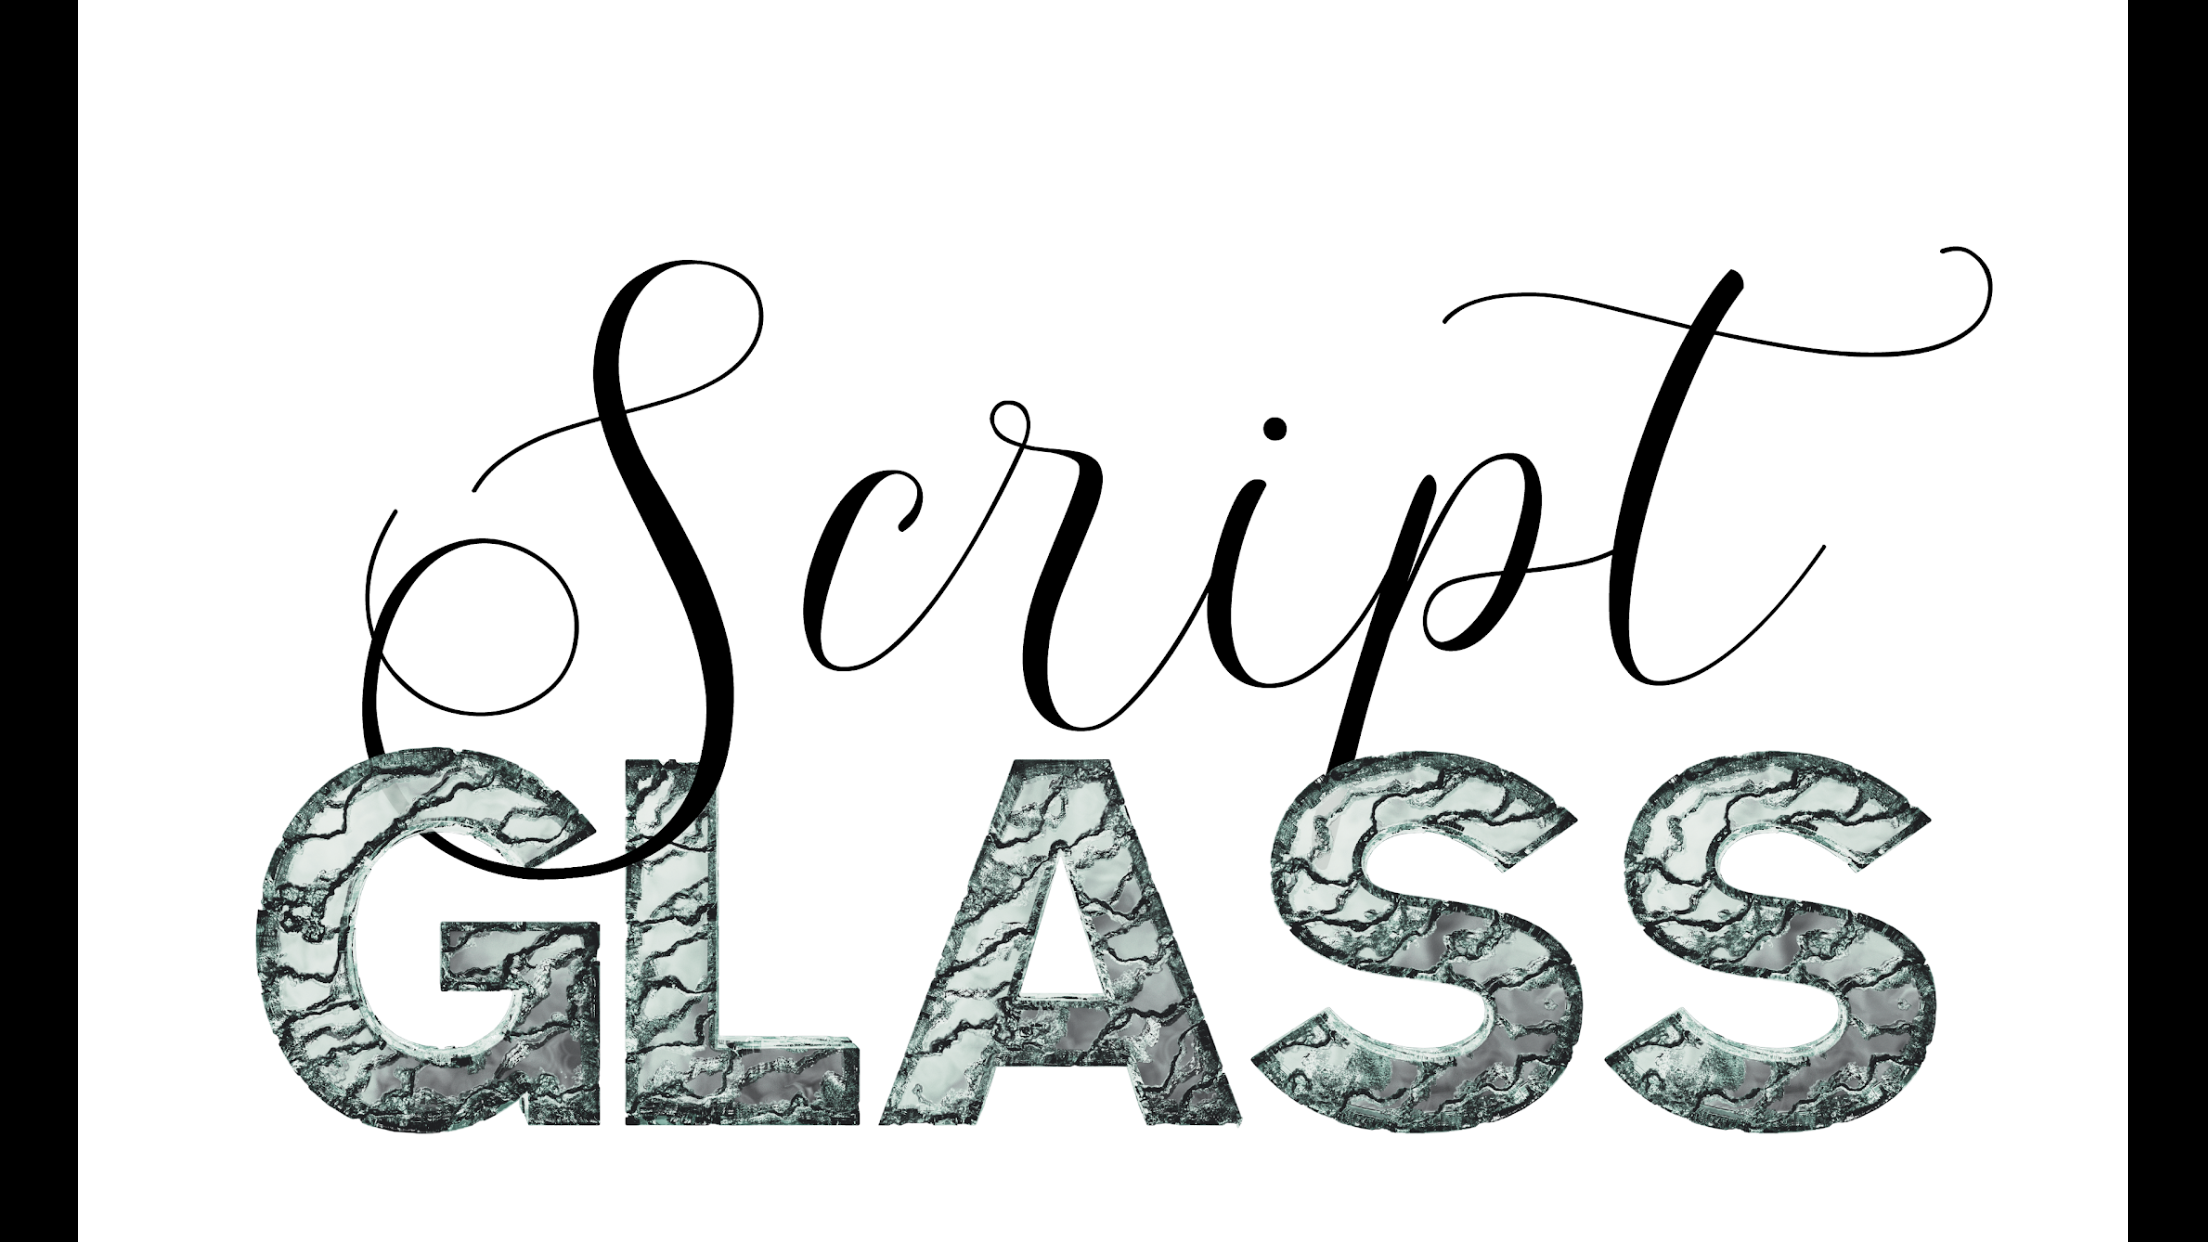 Designer Inspired LV Glass Rolling Tray – Script Glass